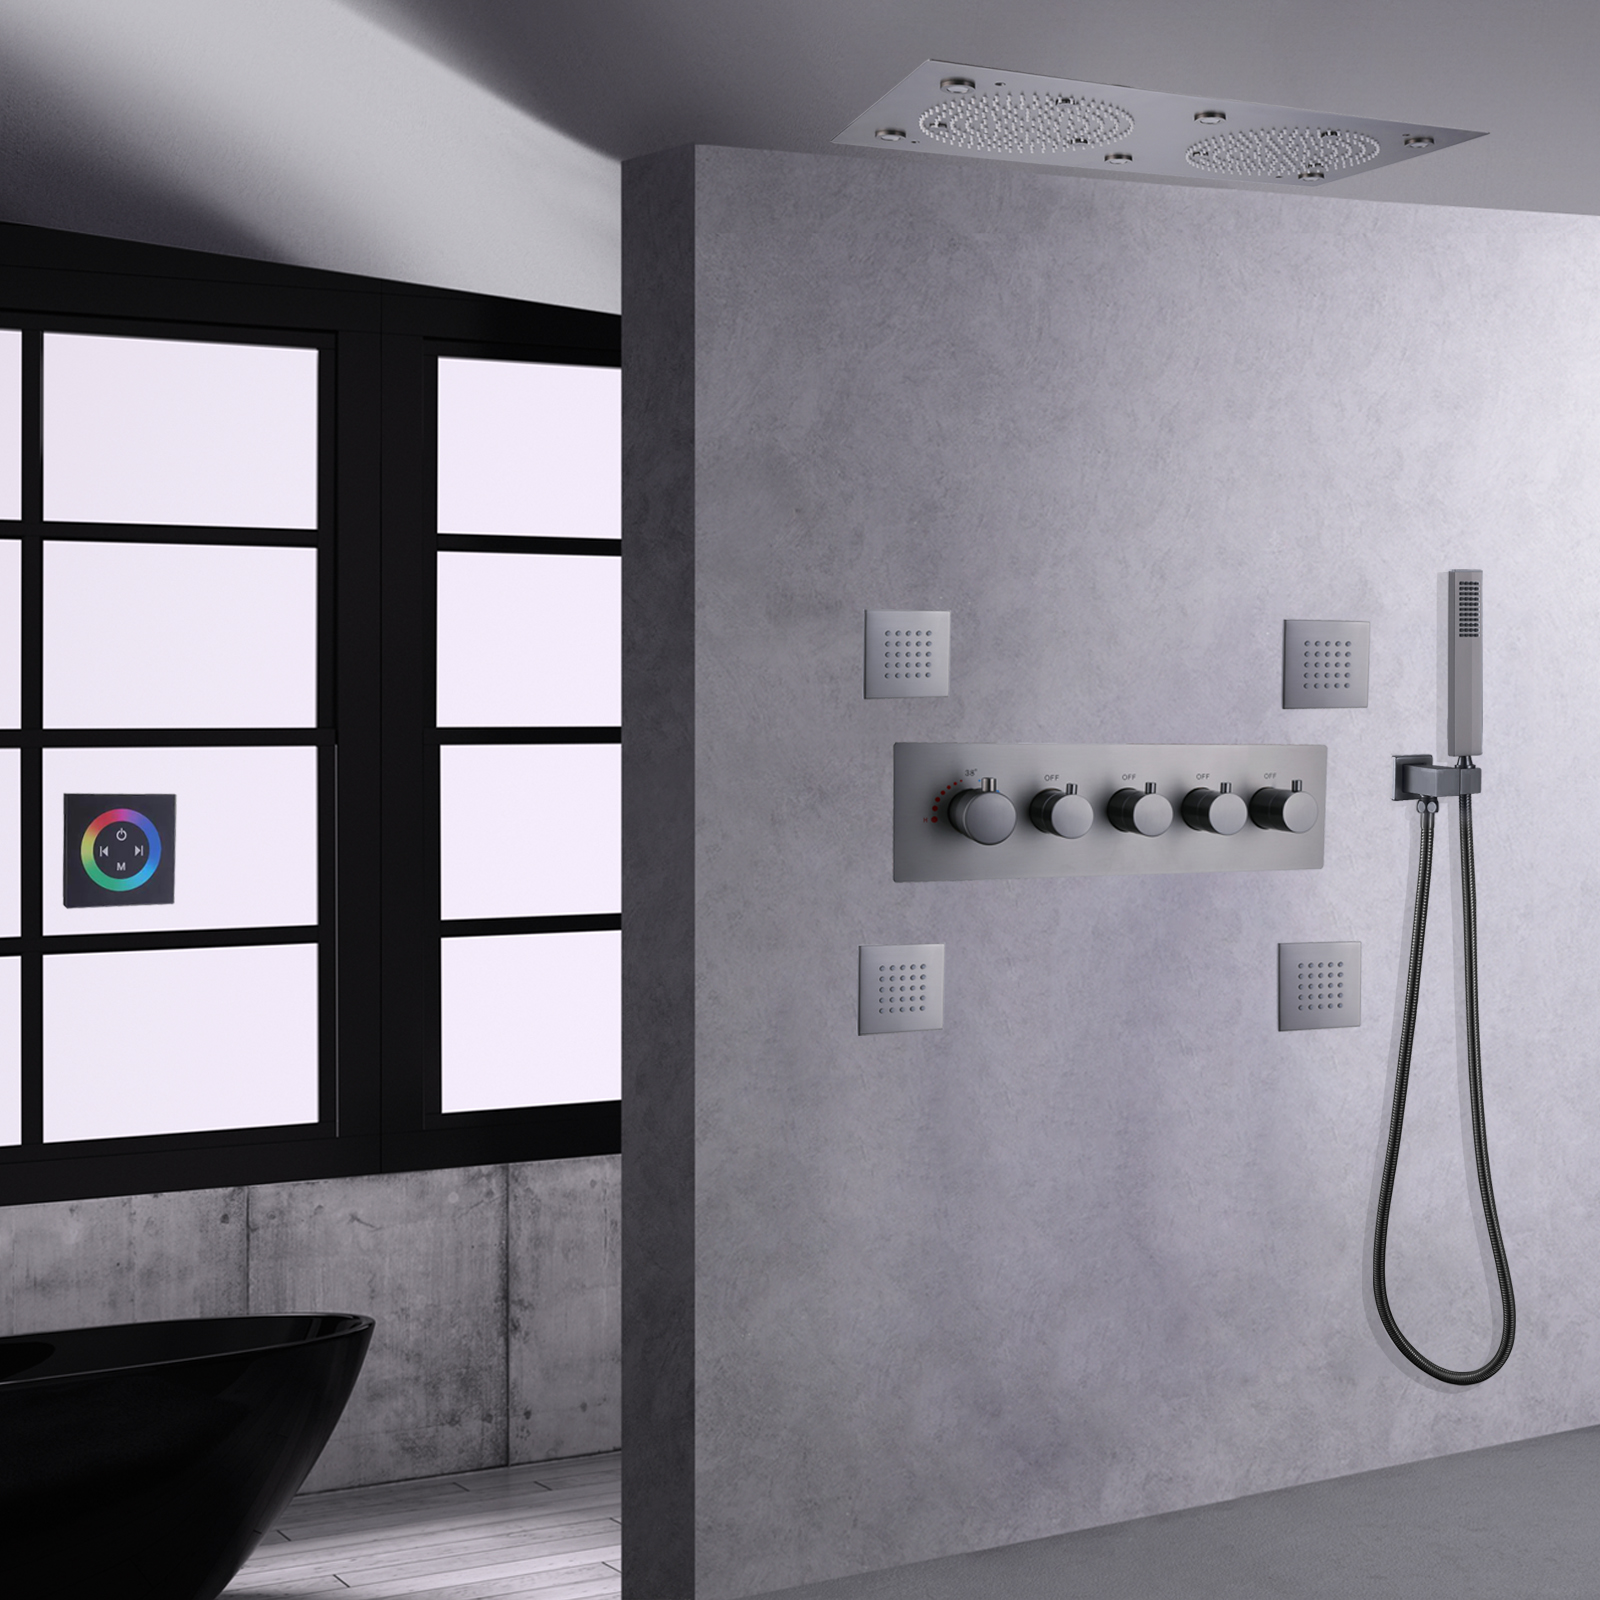 Gun Gray Shower System 7 Colorful LED Bathroom Thermostatic Bath Rain Mist Douche Shower Mixer SPA